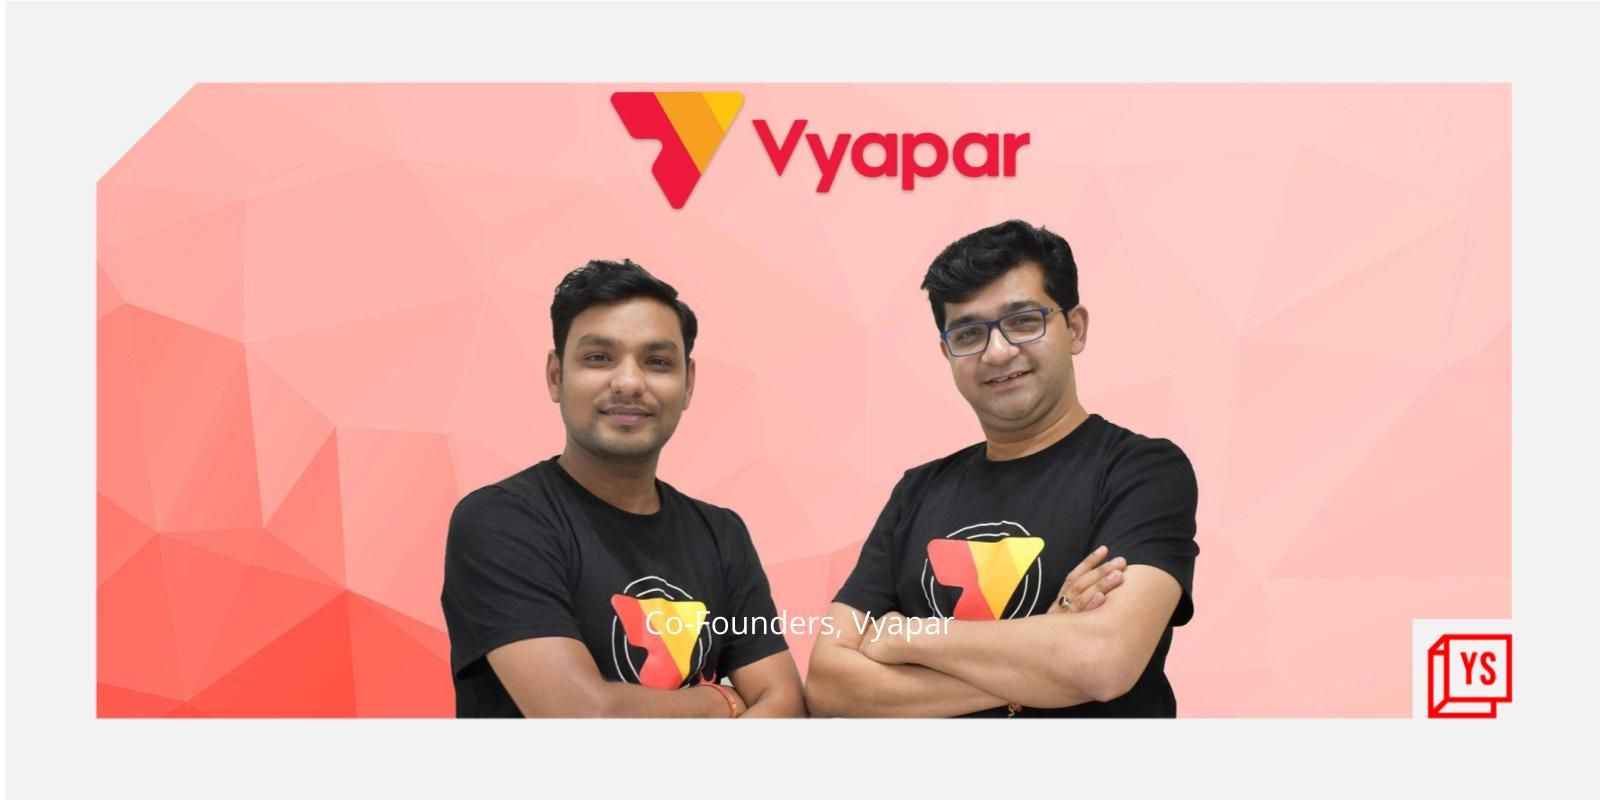 [Funding alert] Vyapar raises $30 M led by WestBridge Capital